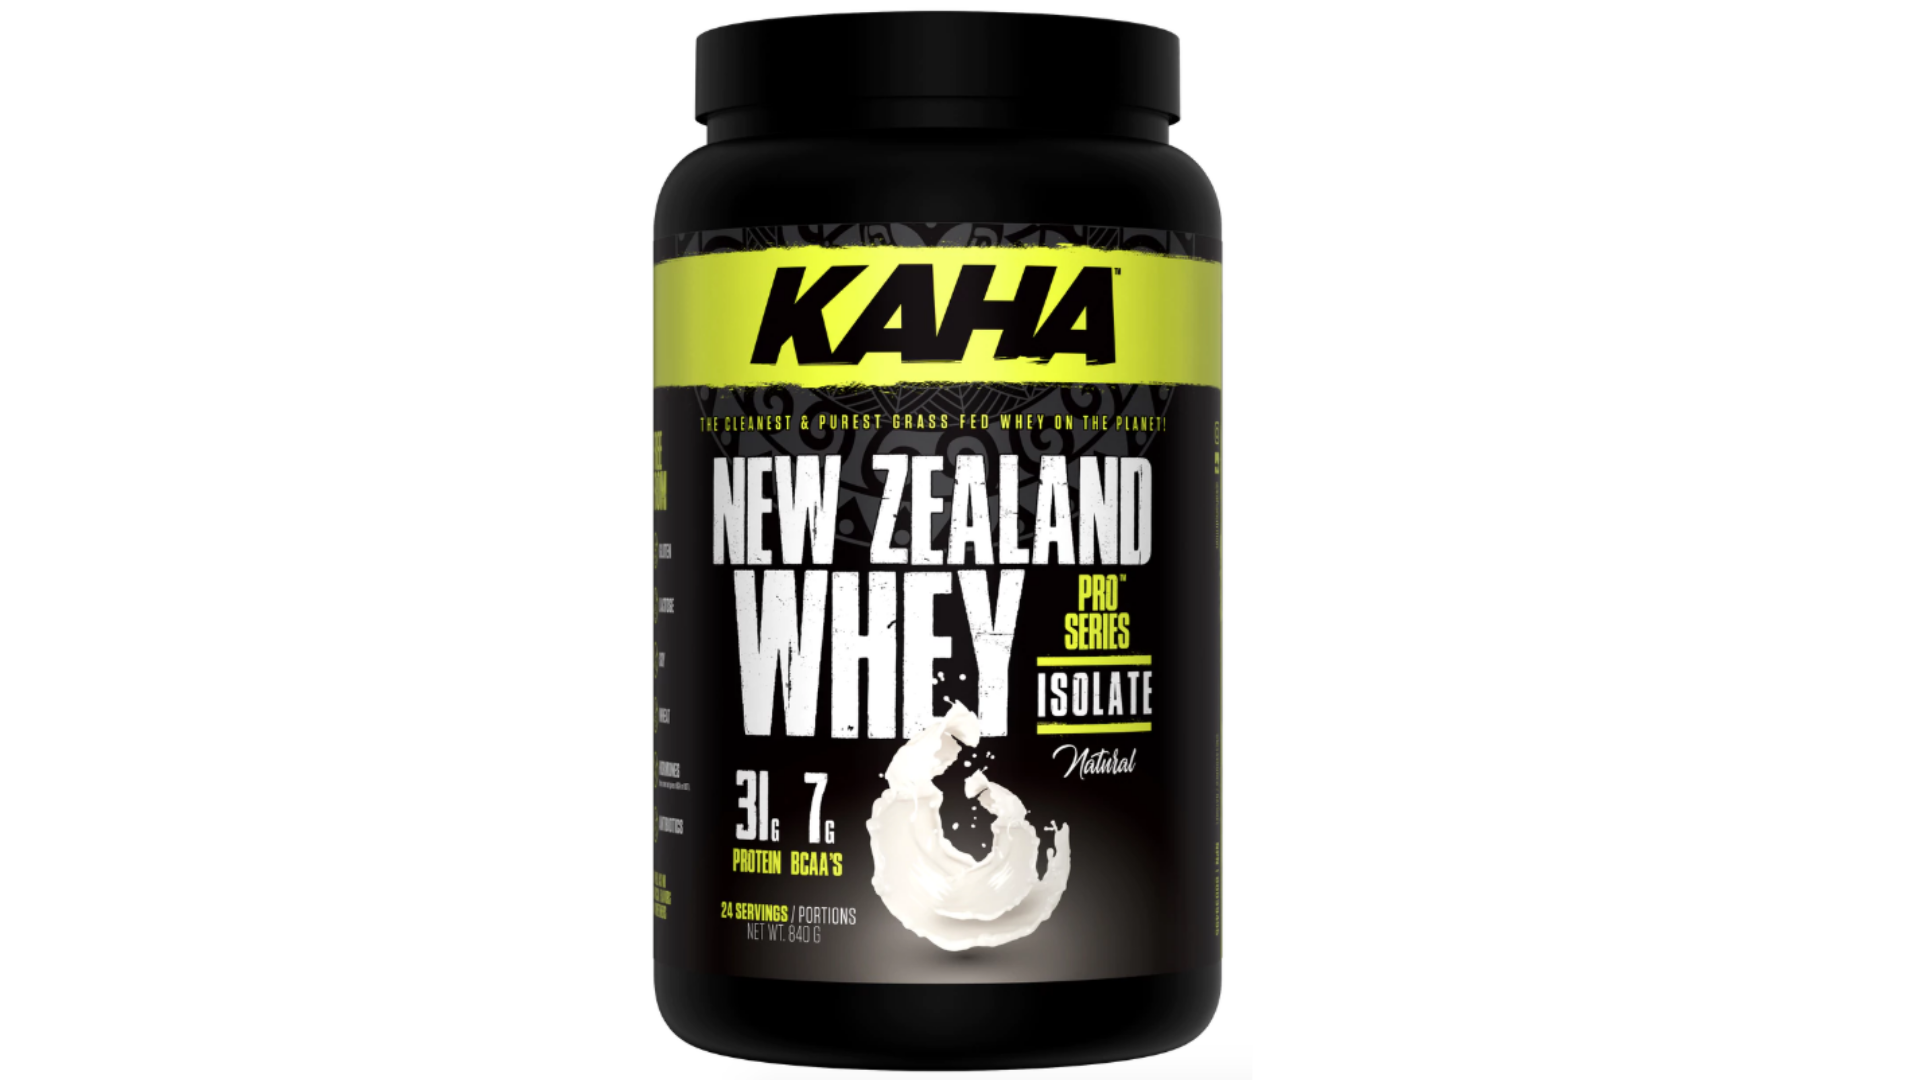 KAHA New Zealand Whey Isolate 720g - Natural